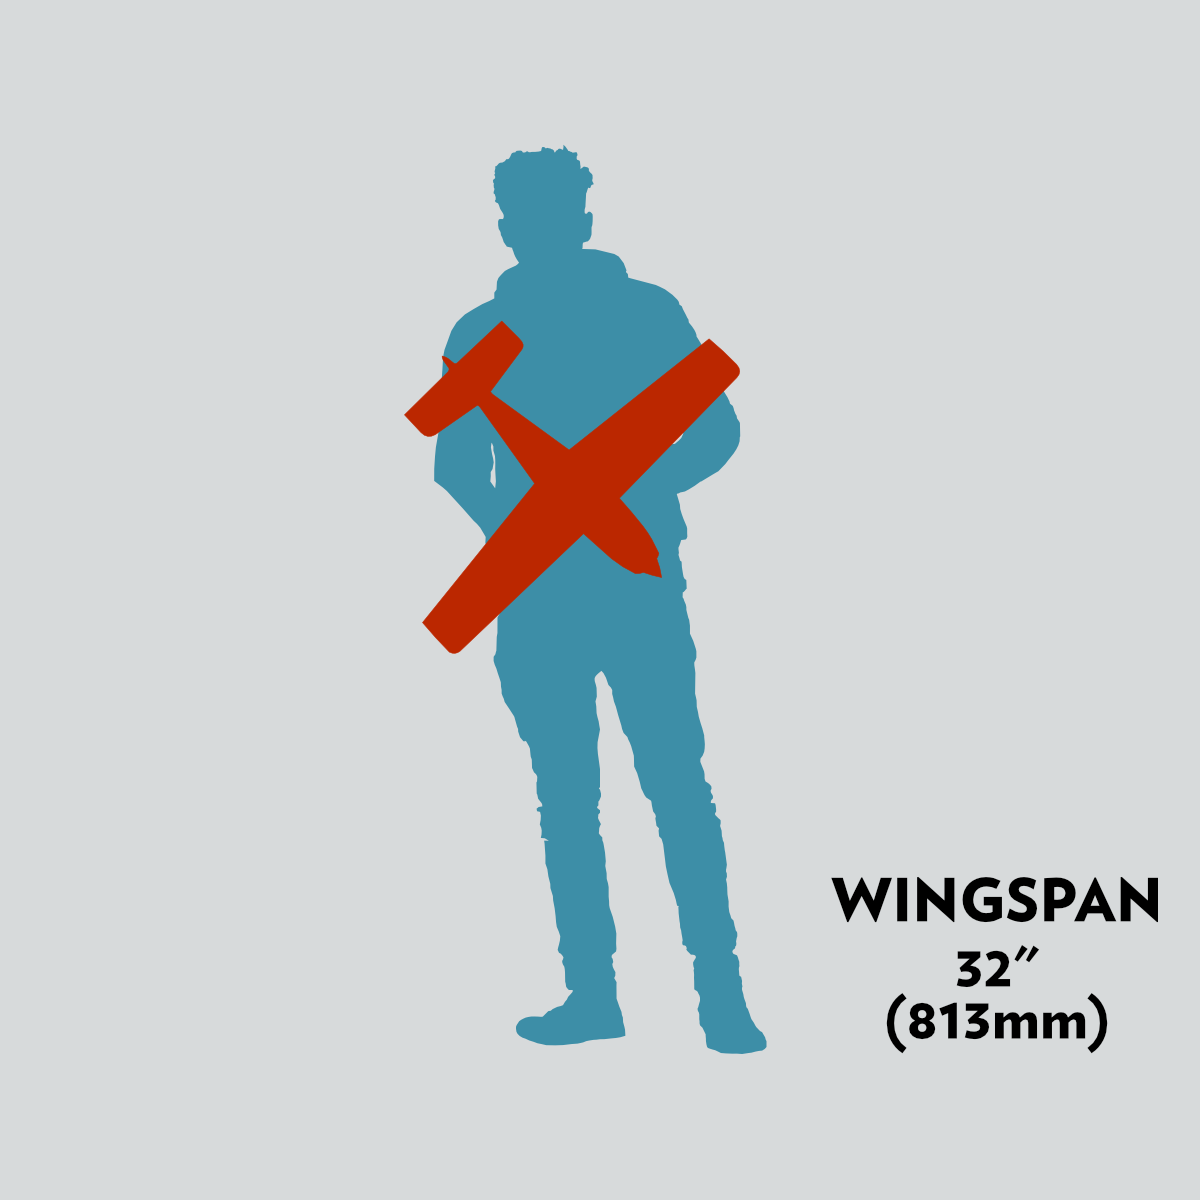 32" (813mm) wingspan